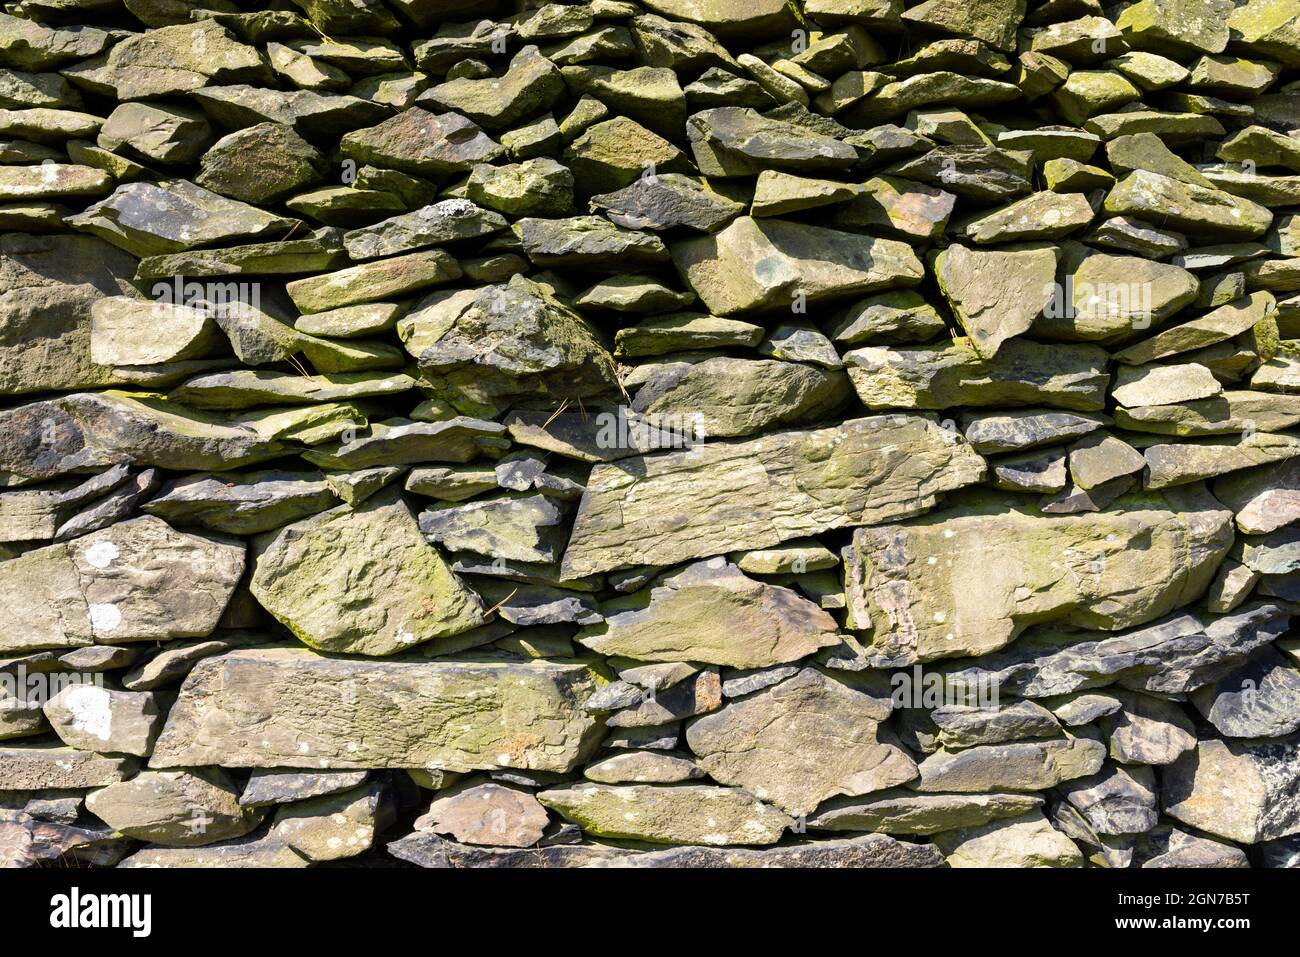 Dry stone wall dry stone walling England GB UK Europe Stock Photo